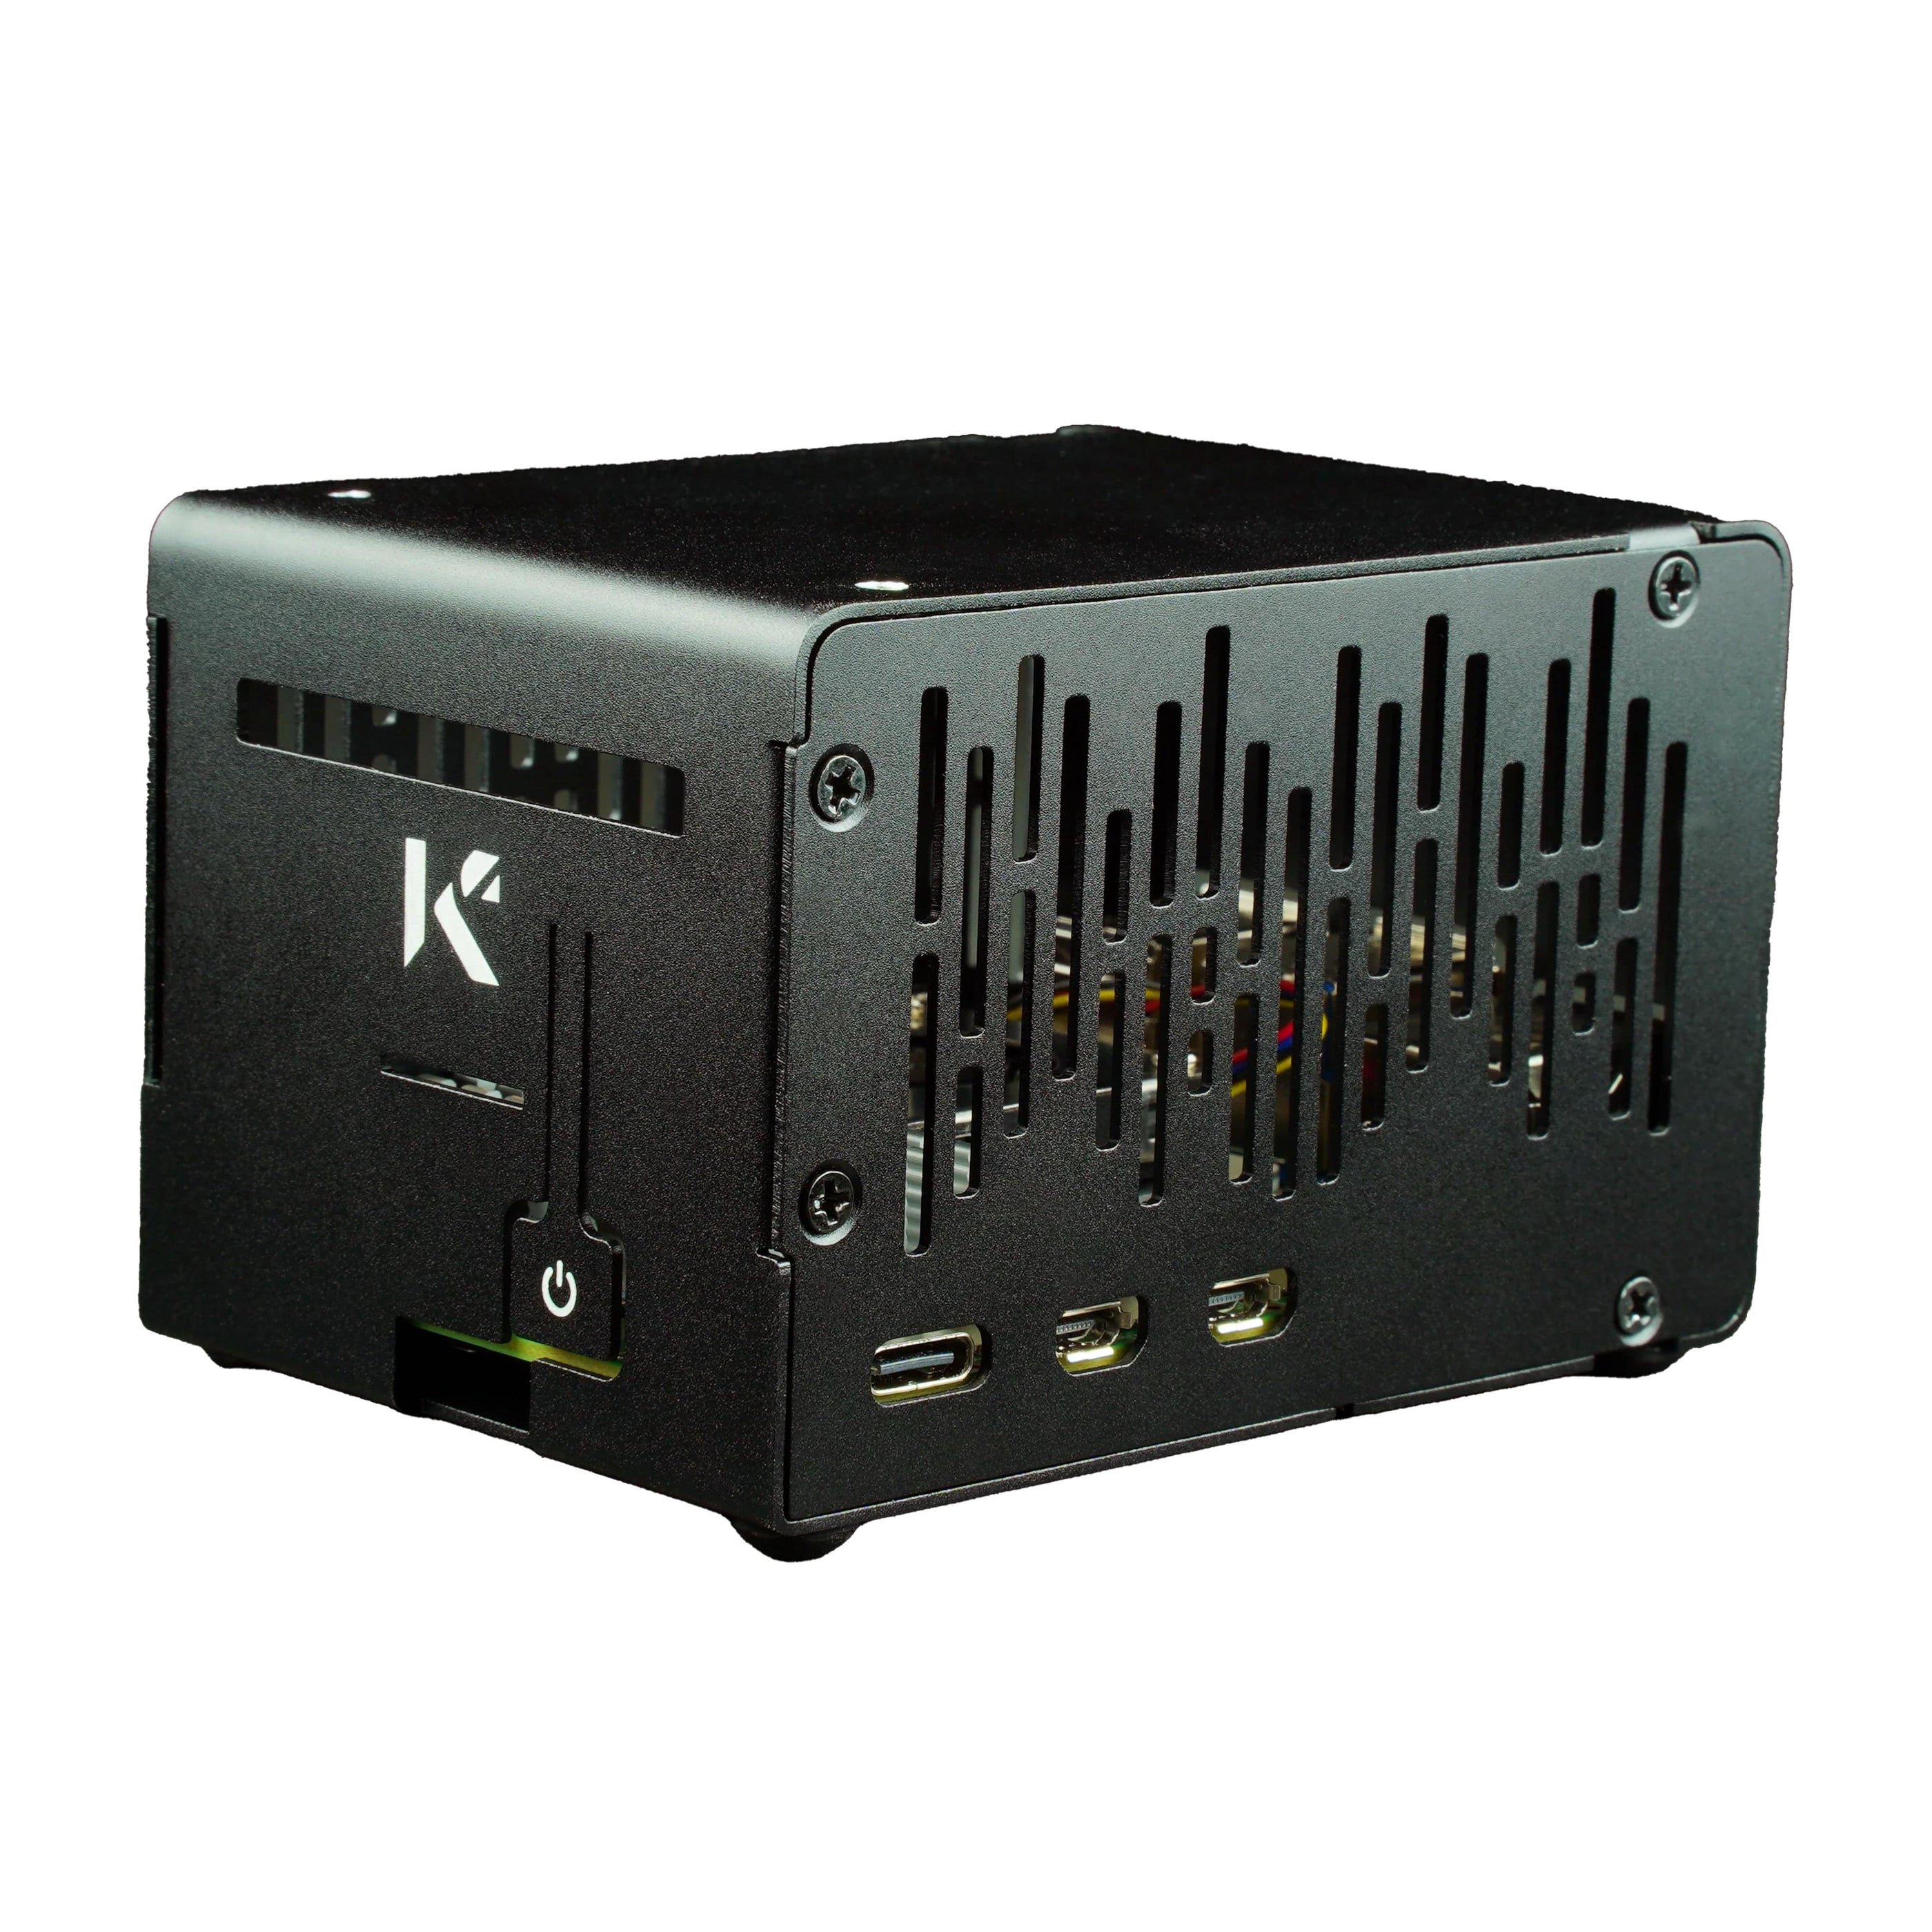 KKSB HAT Case for Raspberry Pi 5 - The Pi Hut